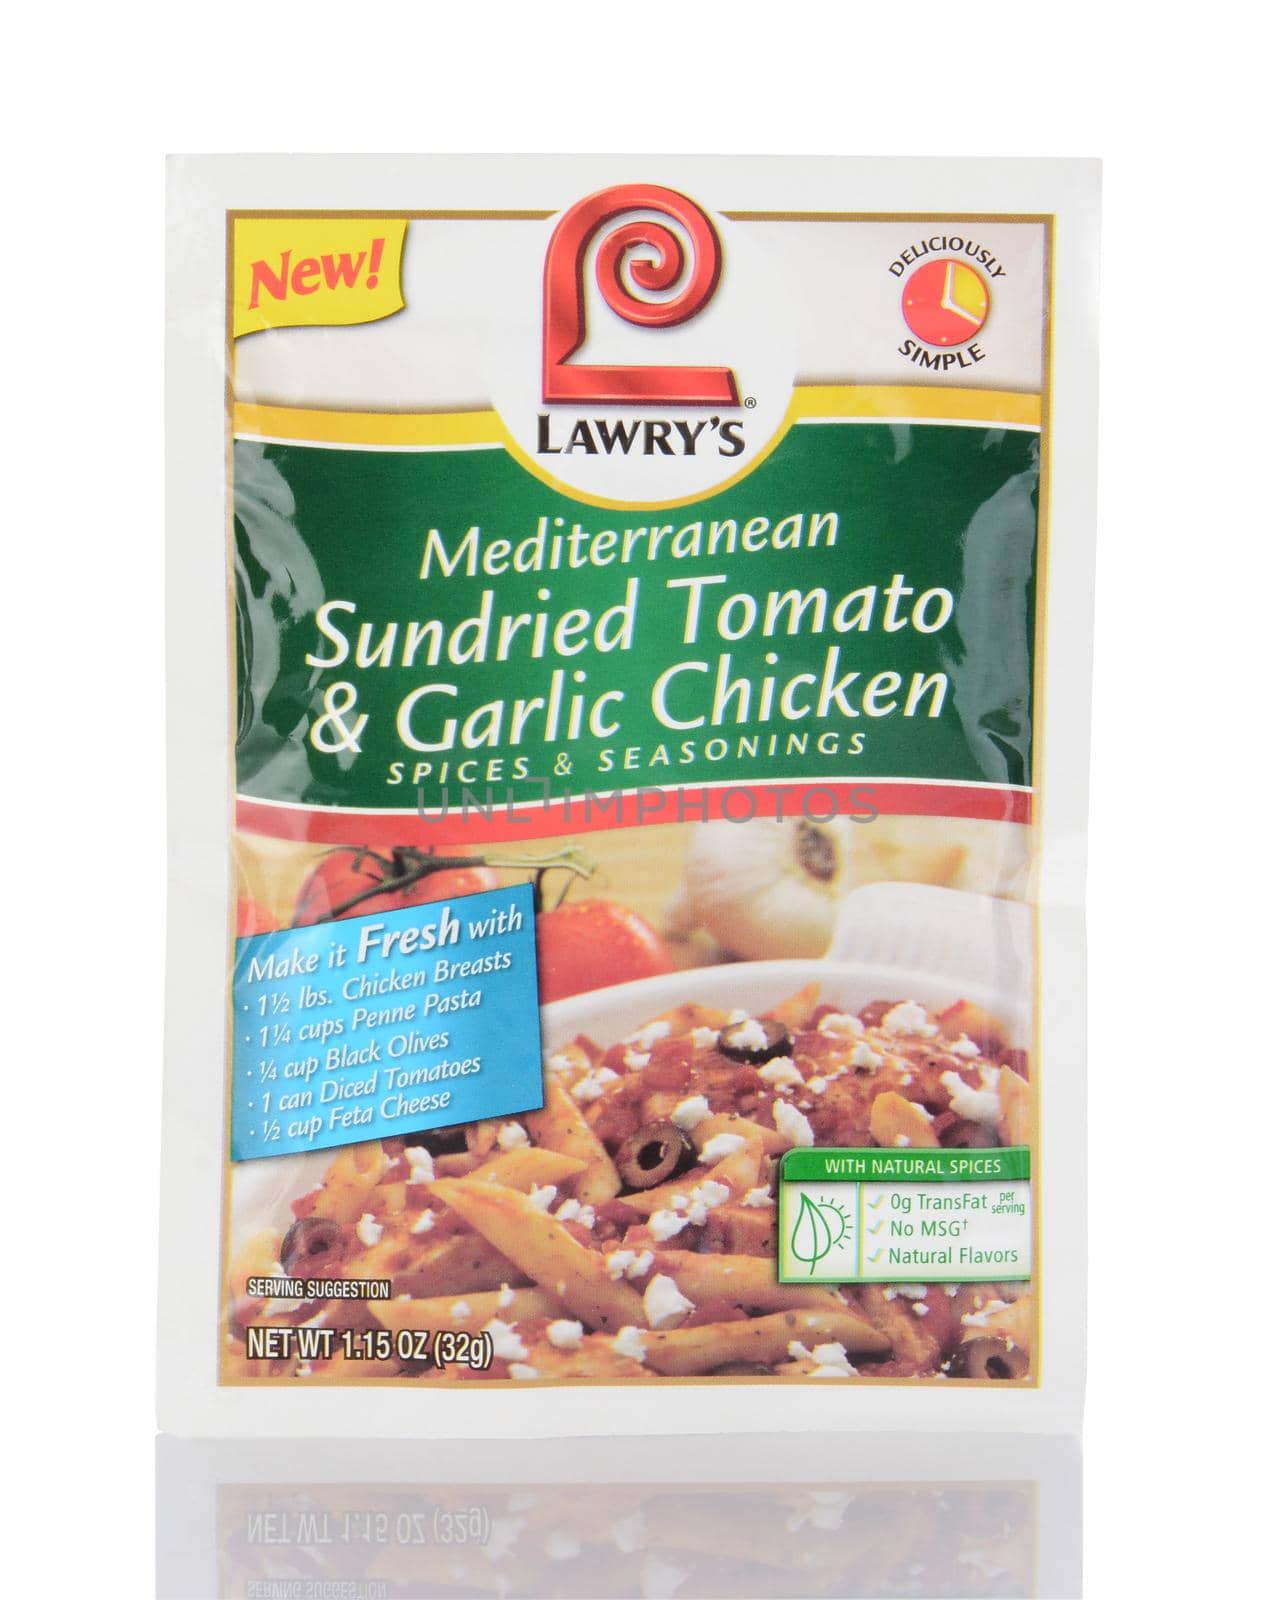 Lawry's Sundried Tomato and Garlic Chicken Seasoning by sCukrov